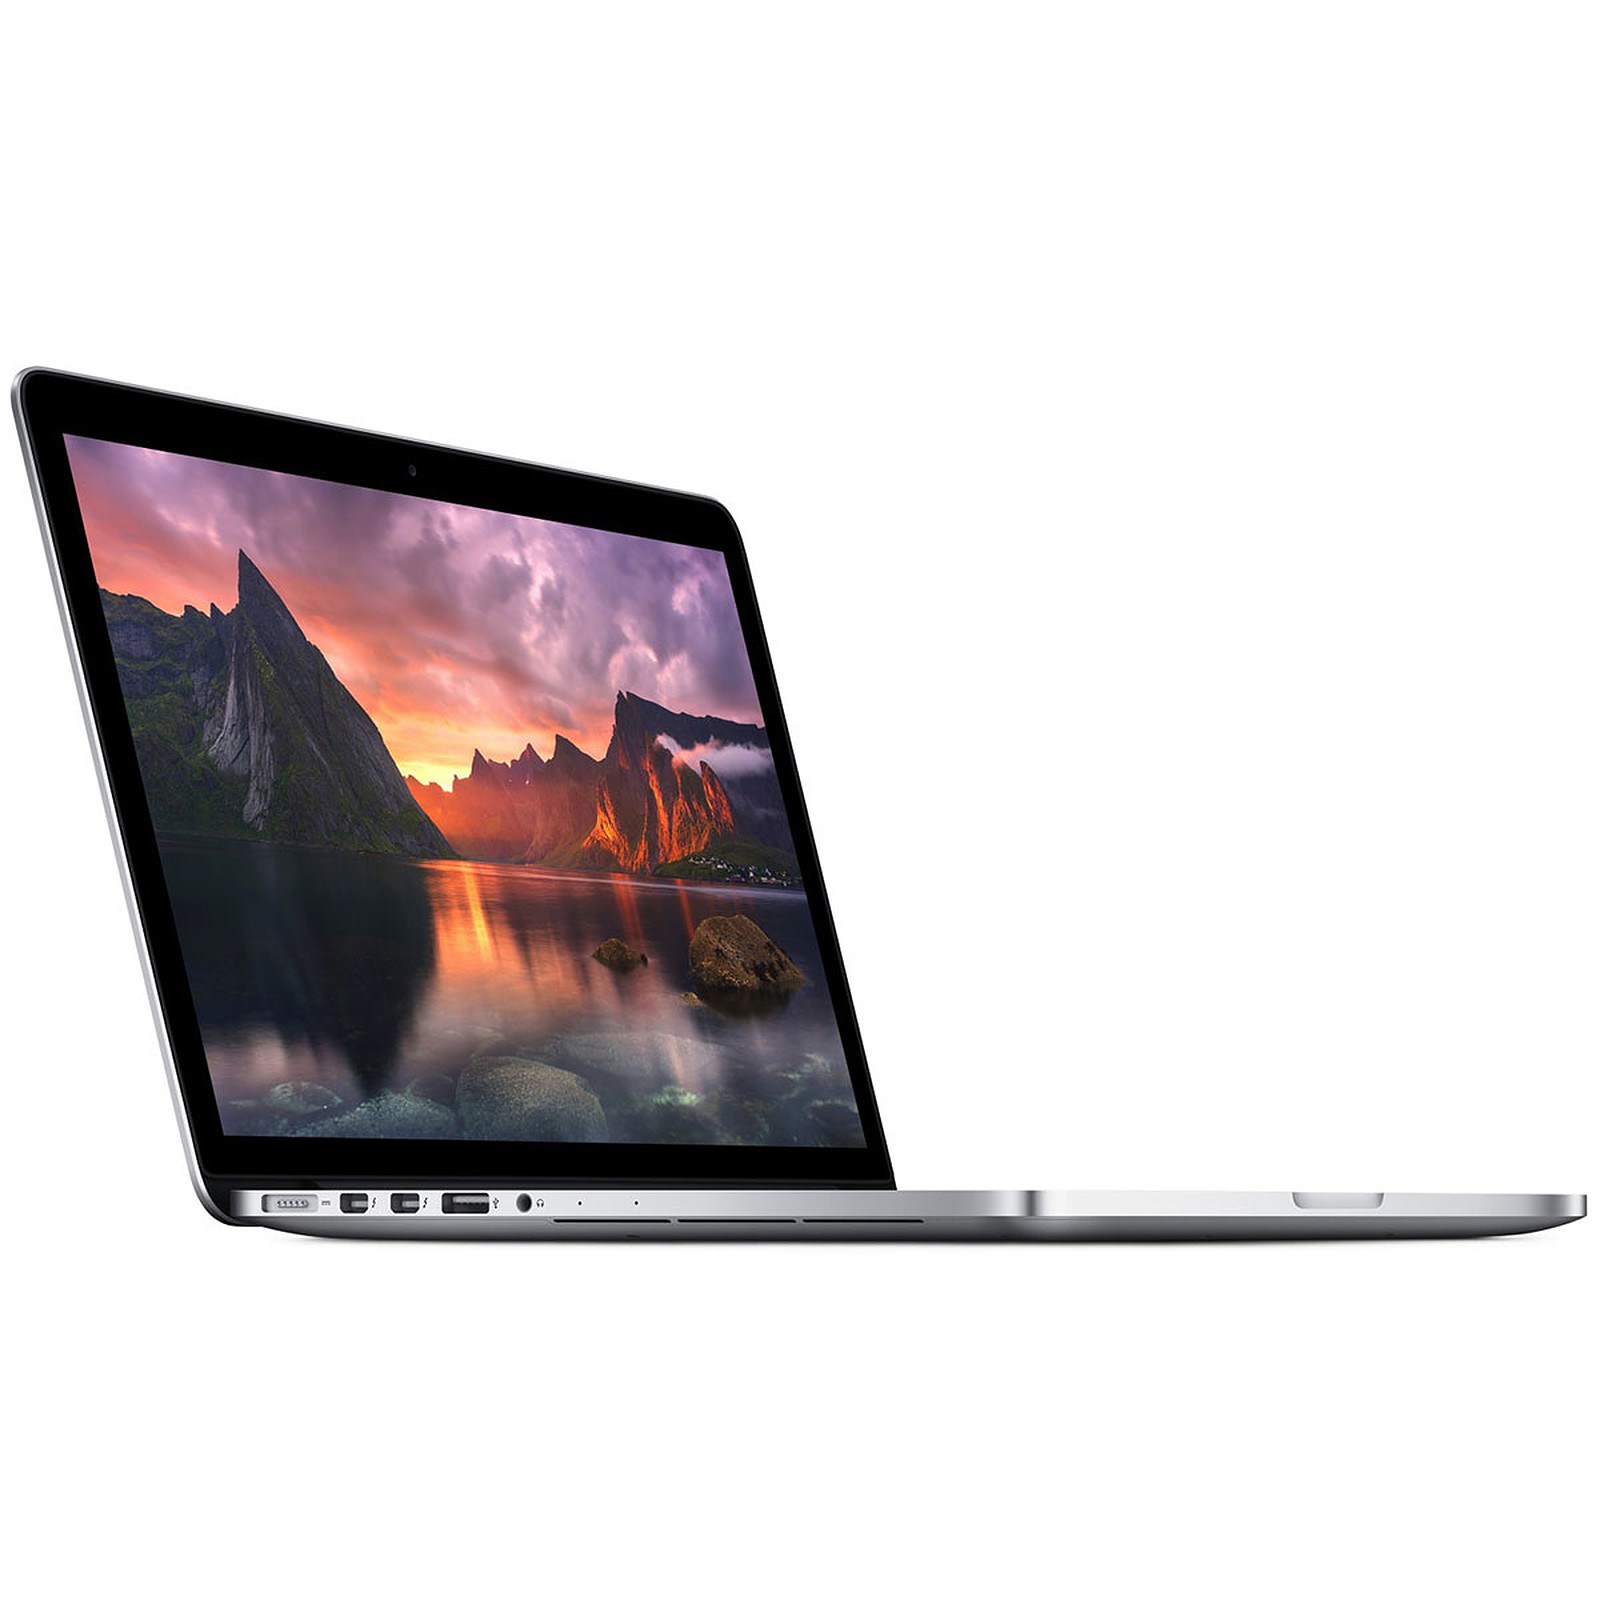 Teхника Apple - MacBook - Срочный ремонт MacBook Pro 15 (A1286)